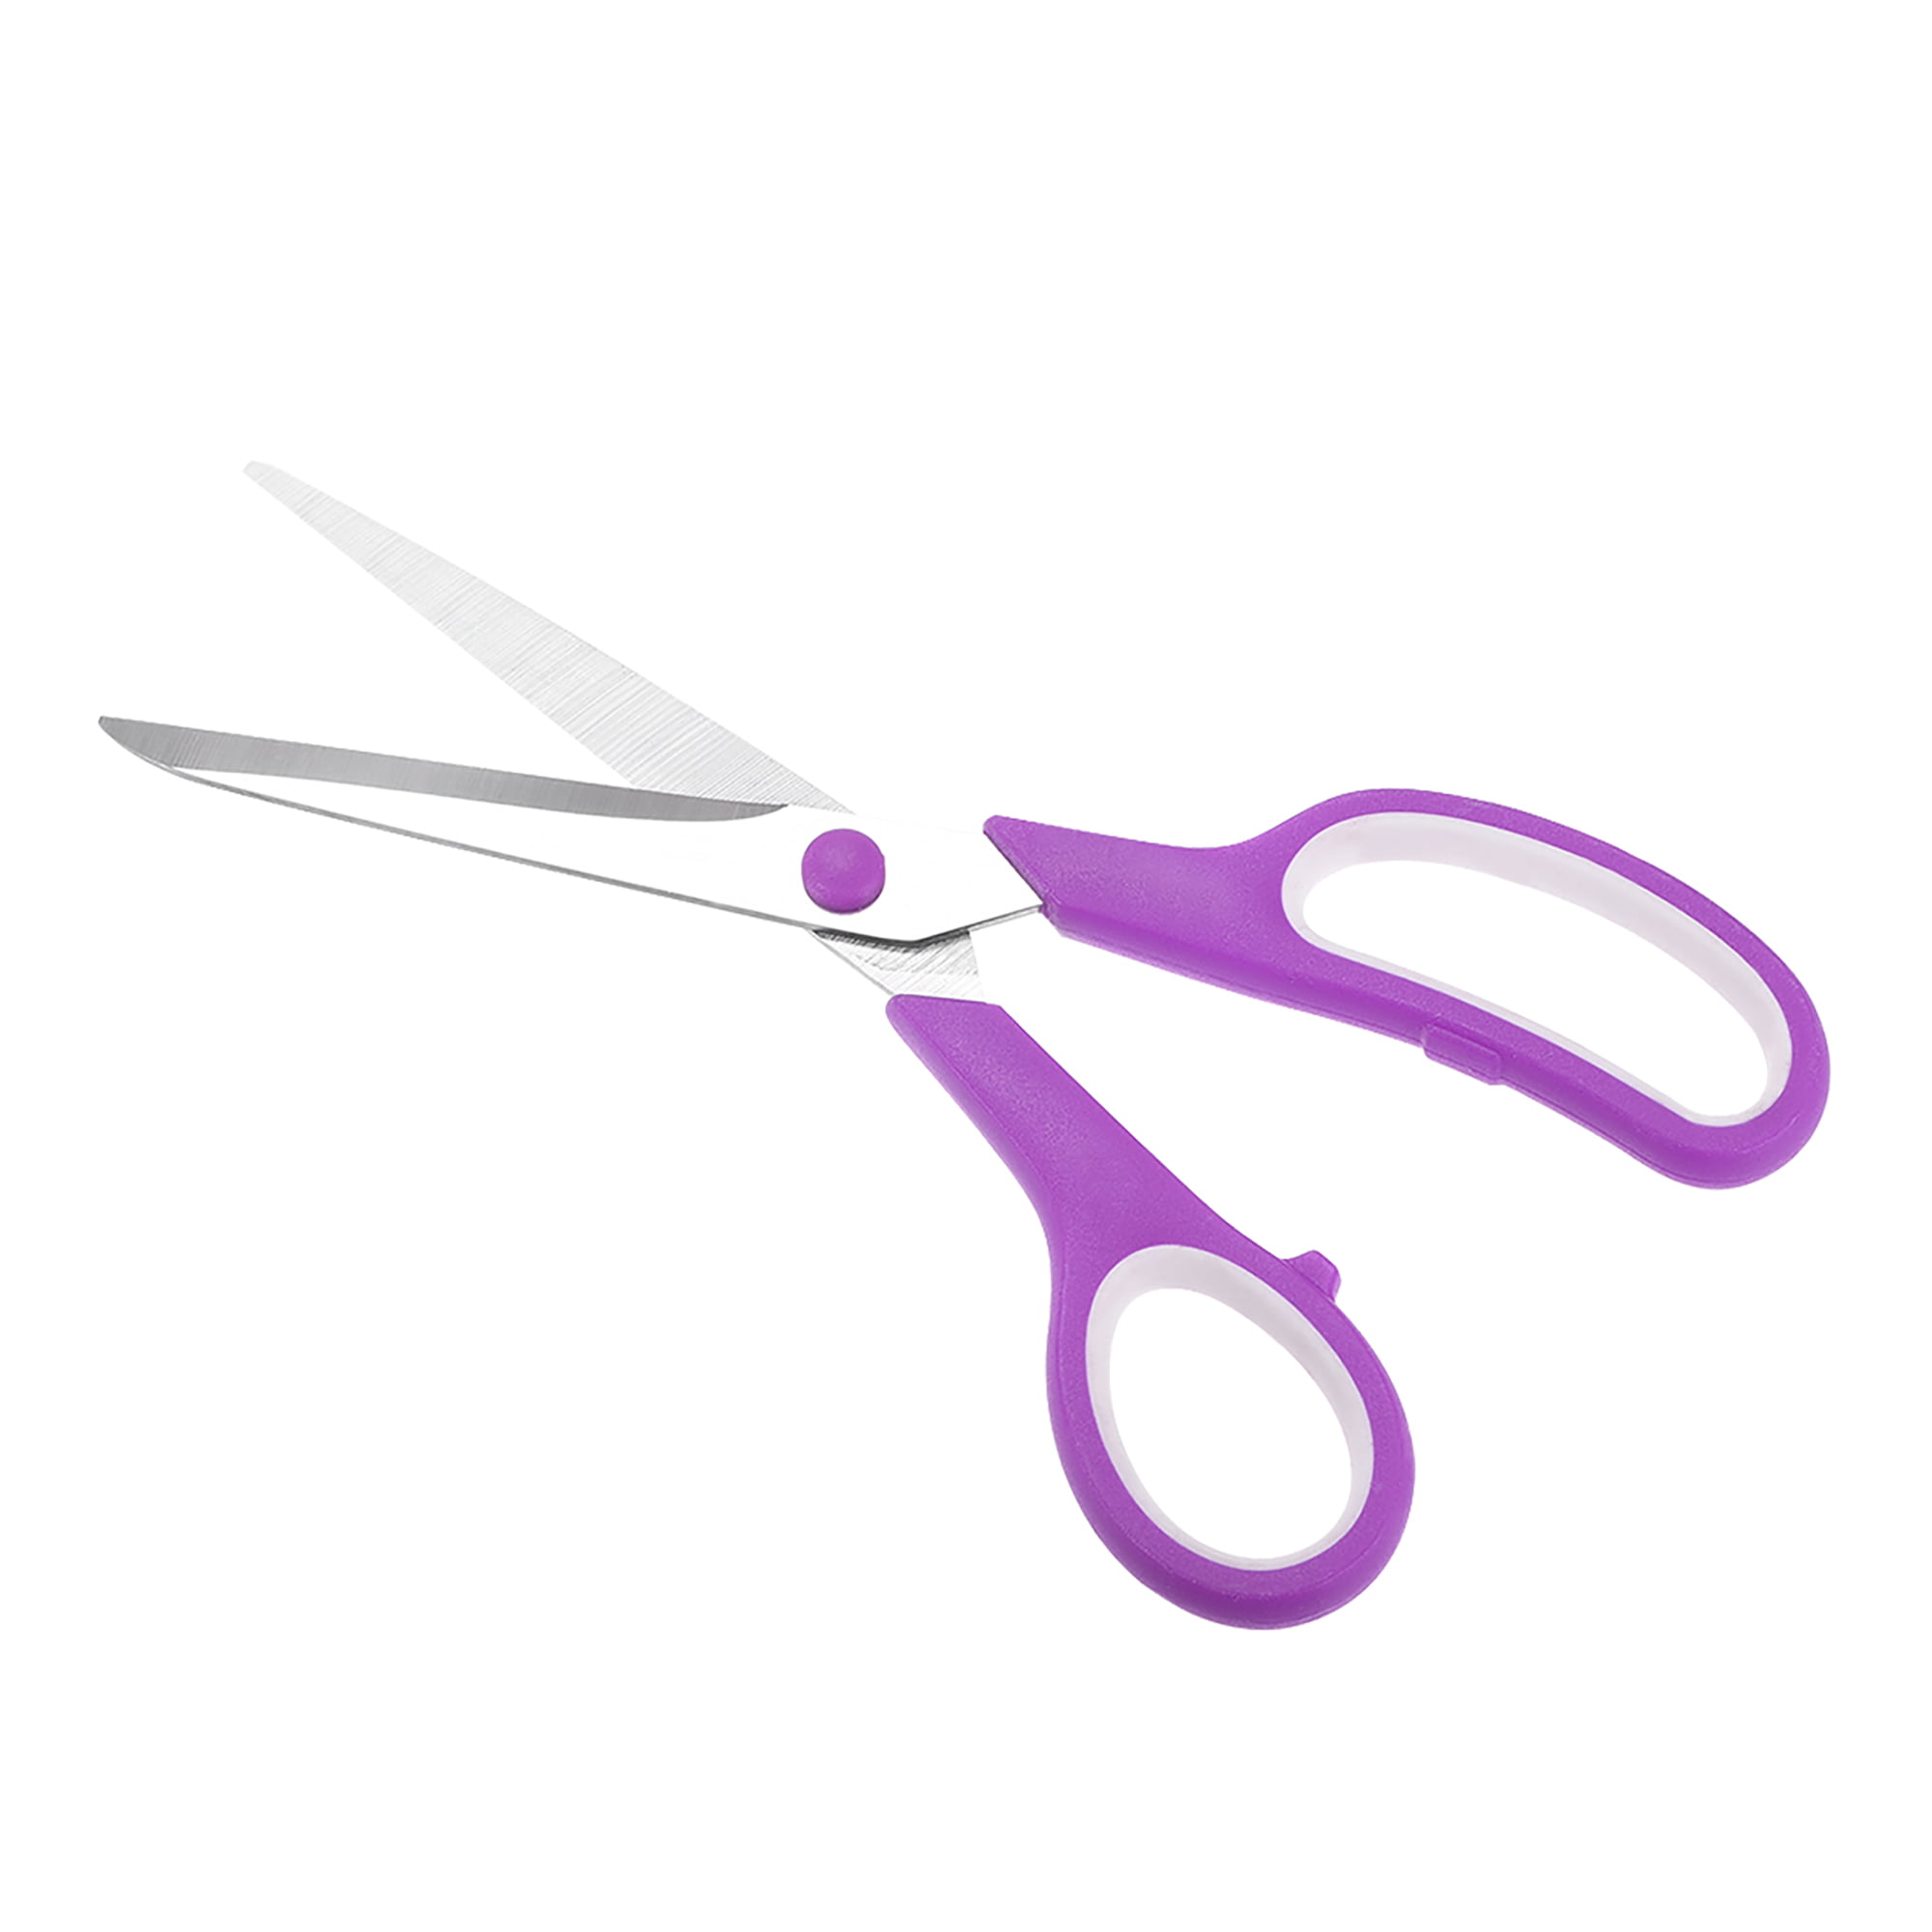 Multipurpose Precision Scissors 3.3 Inch Office Home Use Shears Gold Handle 